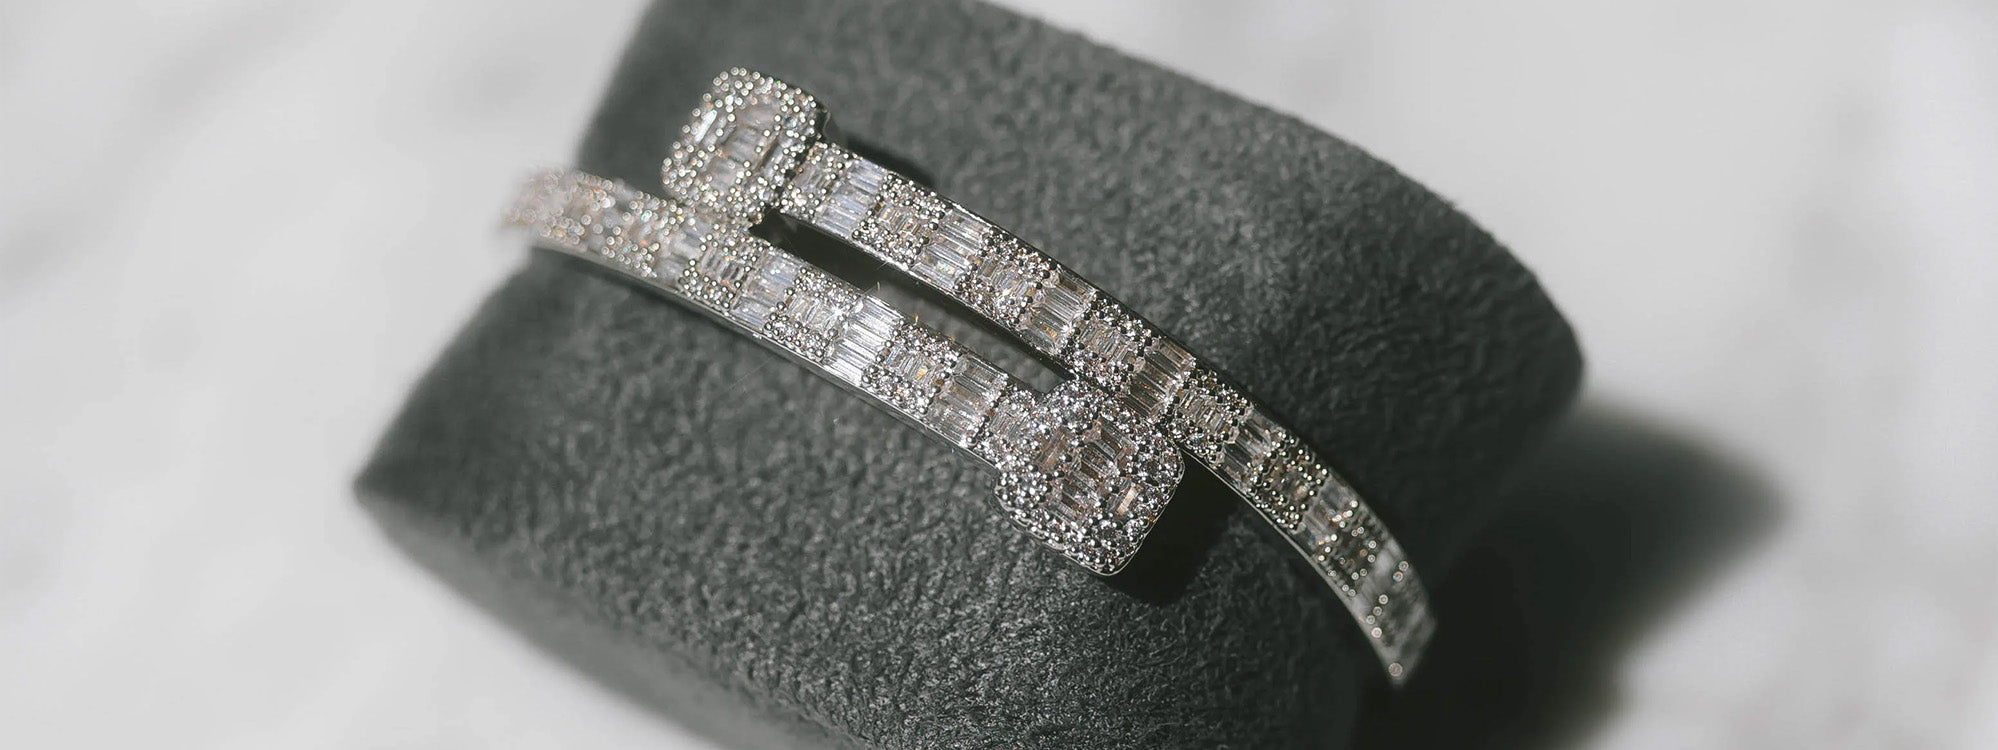 Gucci Mane Jewelry: The Most Insane Jewelry | 6 ICE, LLC